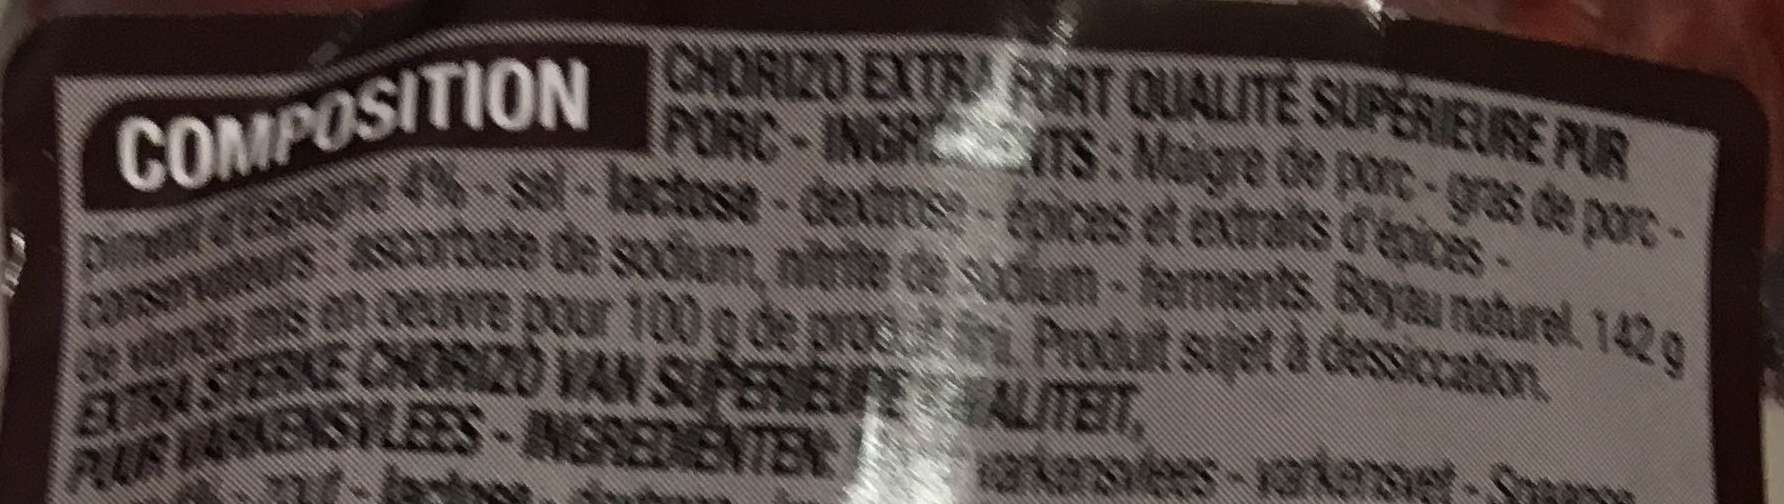 Chorizo Extra Fort aux piments d'Espagne - Ingredients - fr